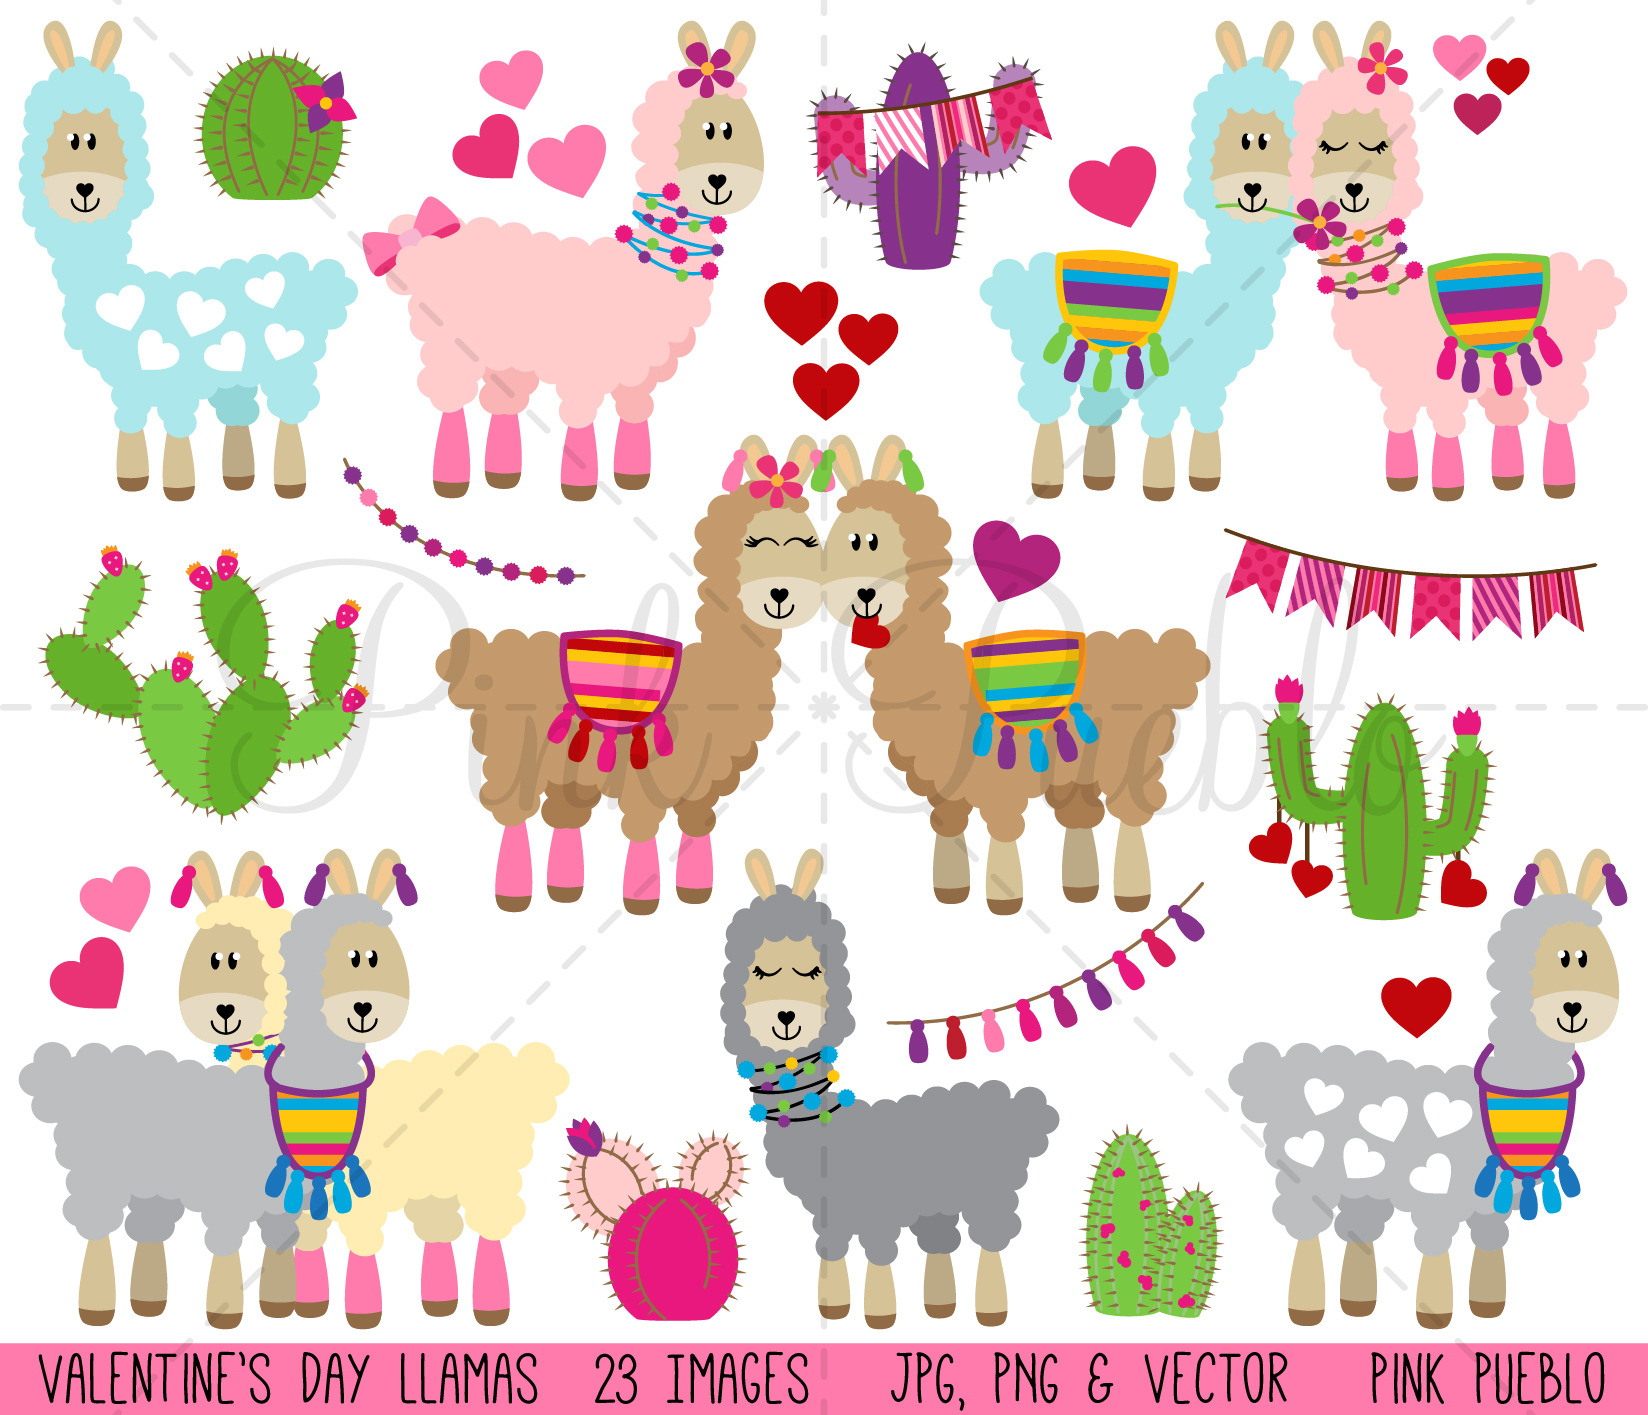 Valentine's Day Llama Clipart/Vector ~ Illustrations ...